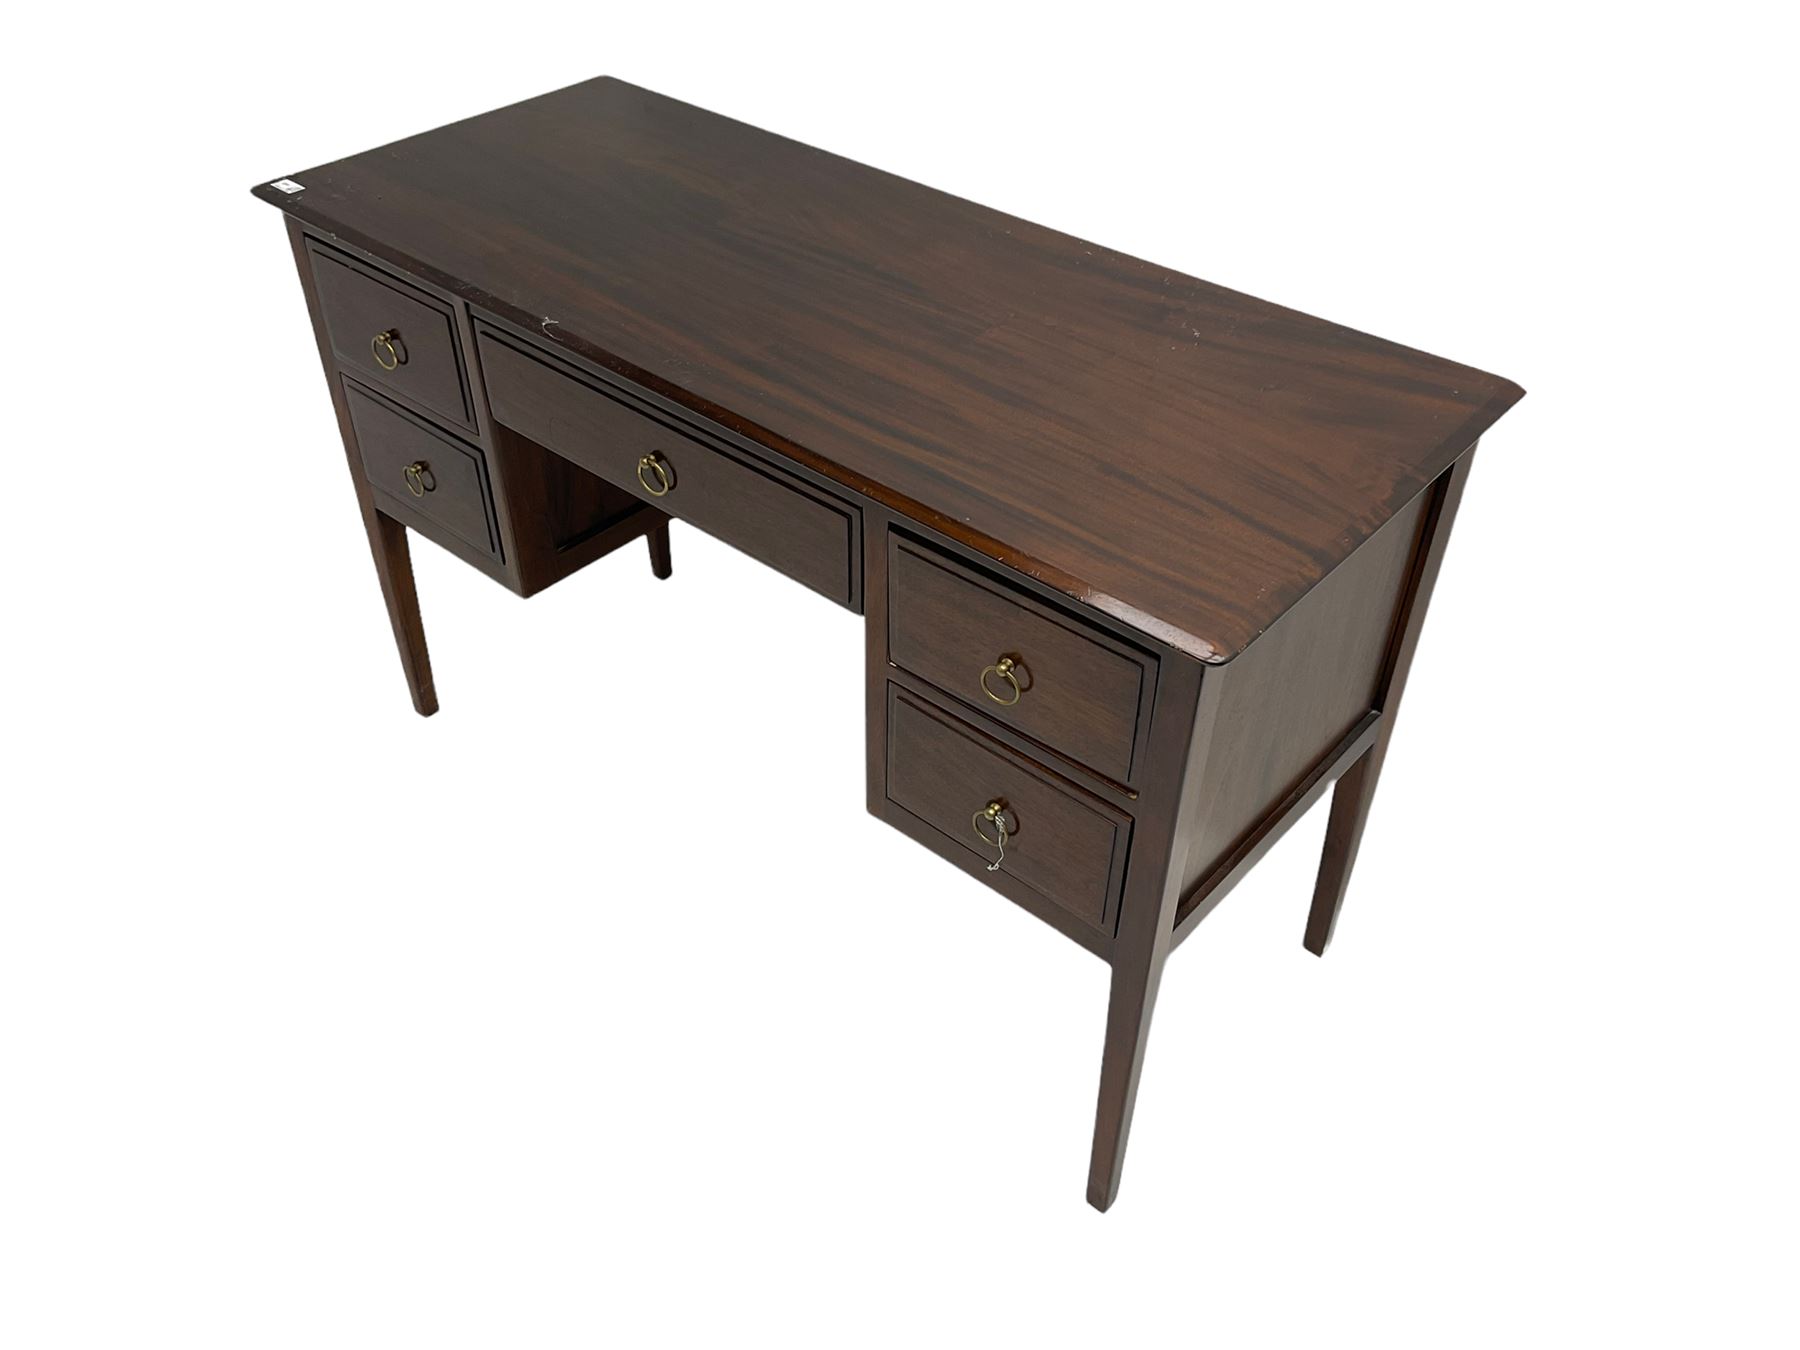 Hardwood kneehole dressing table or desk - Image 8 of 10